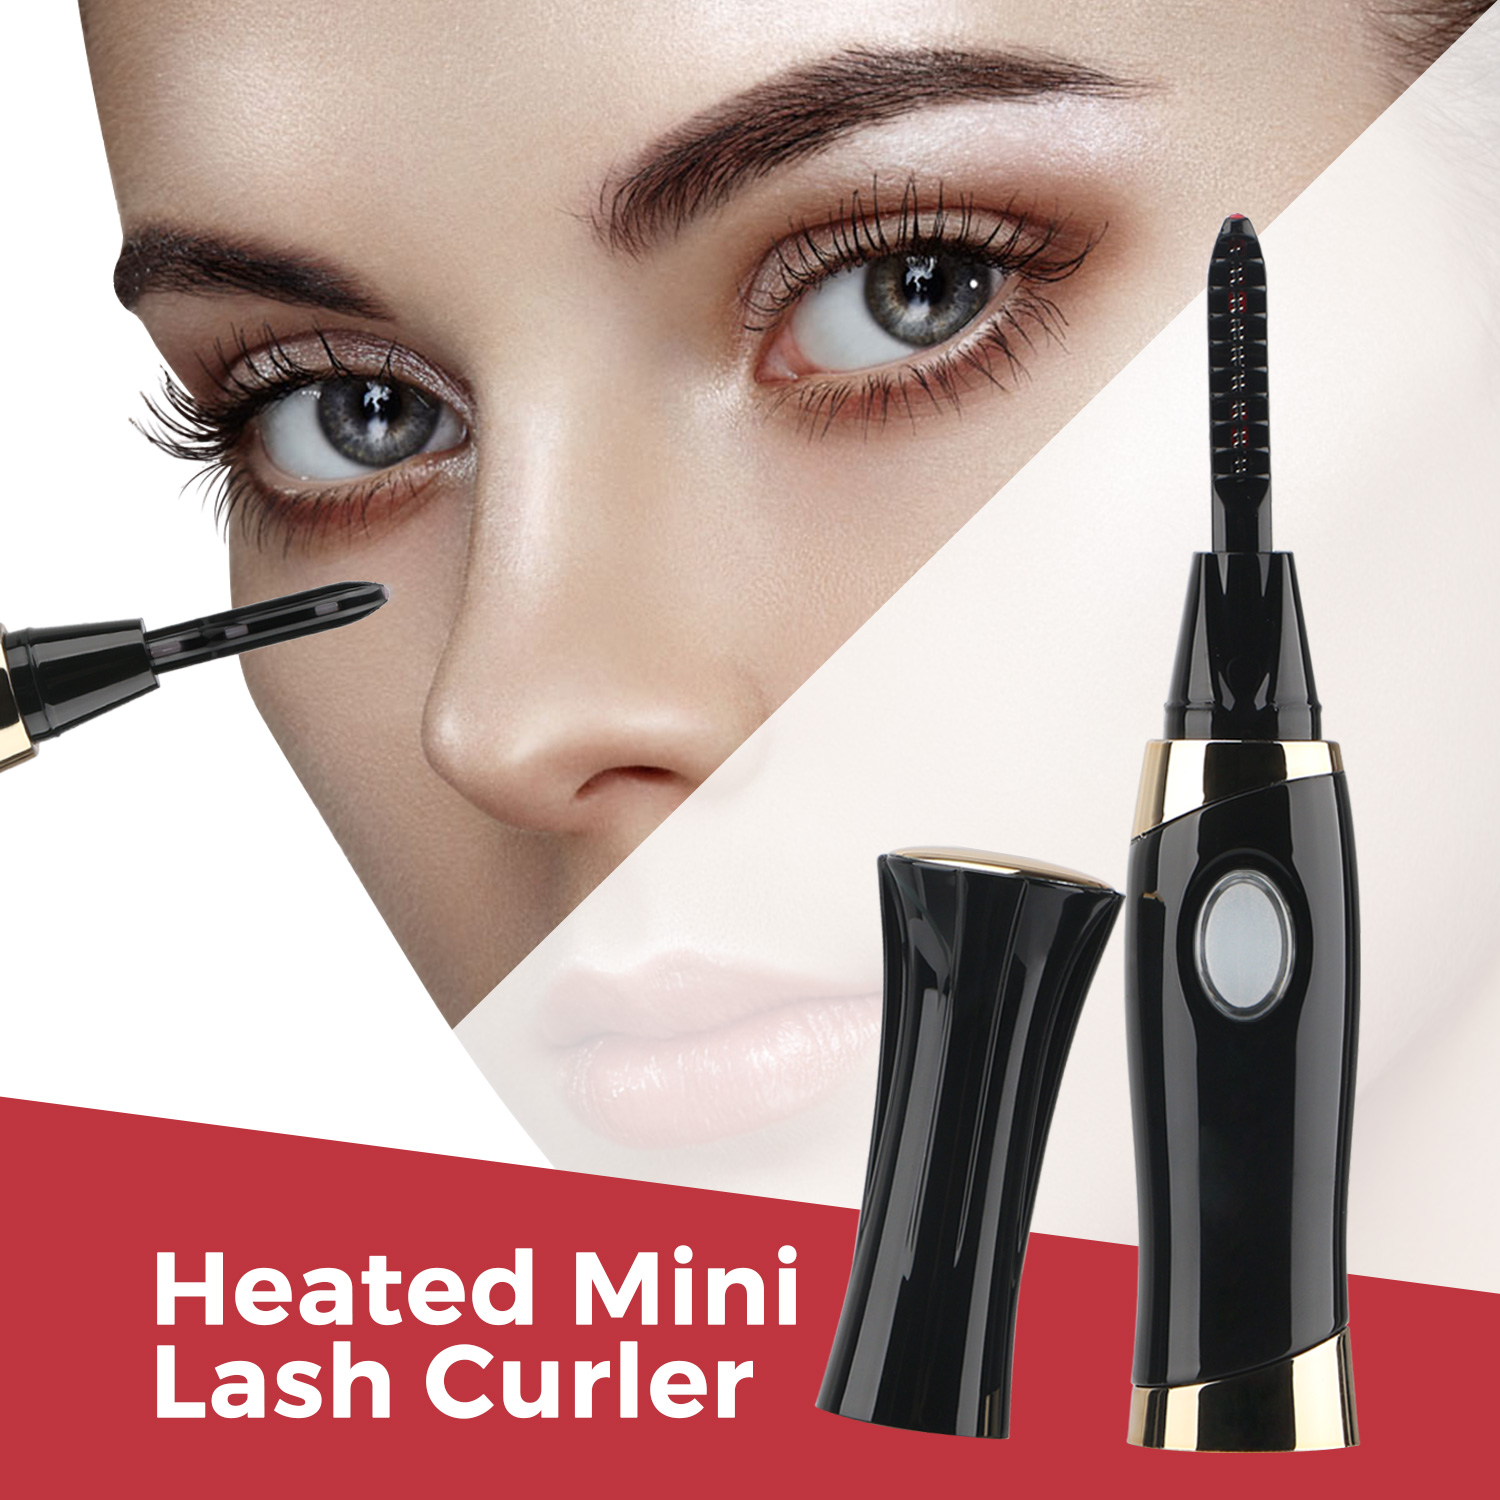 eyelash curler that heats up